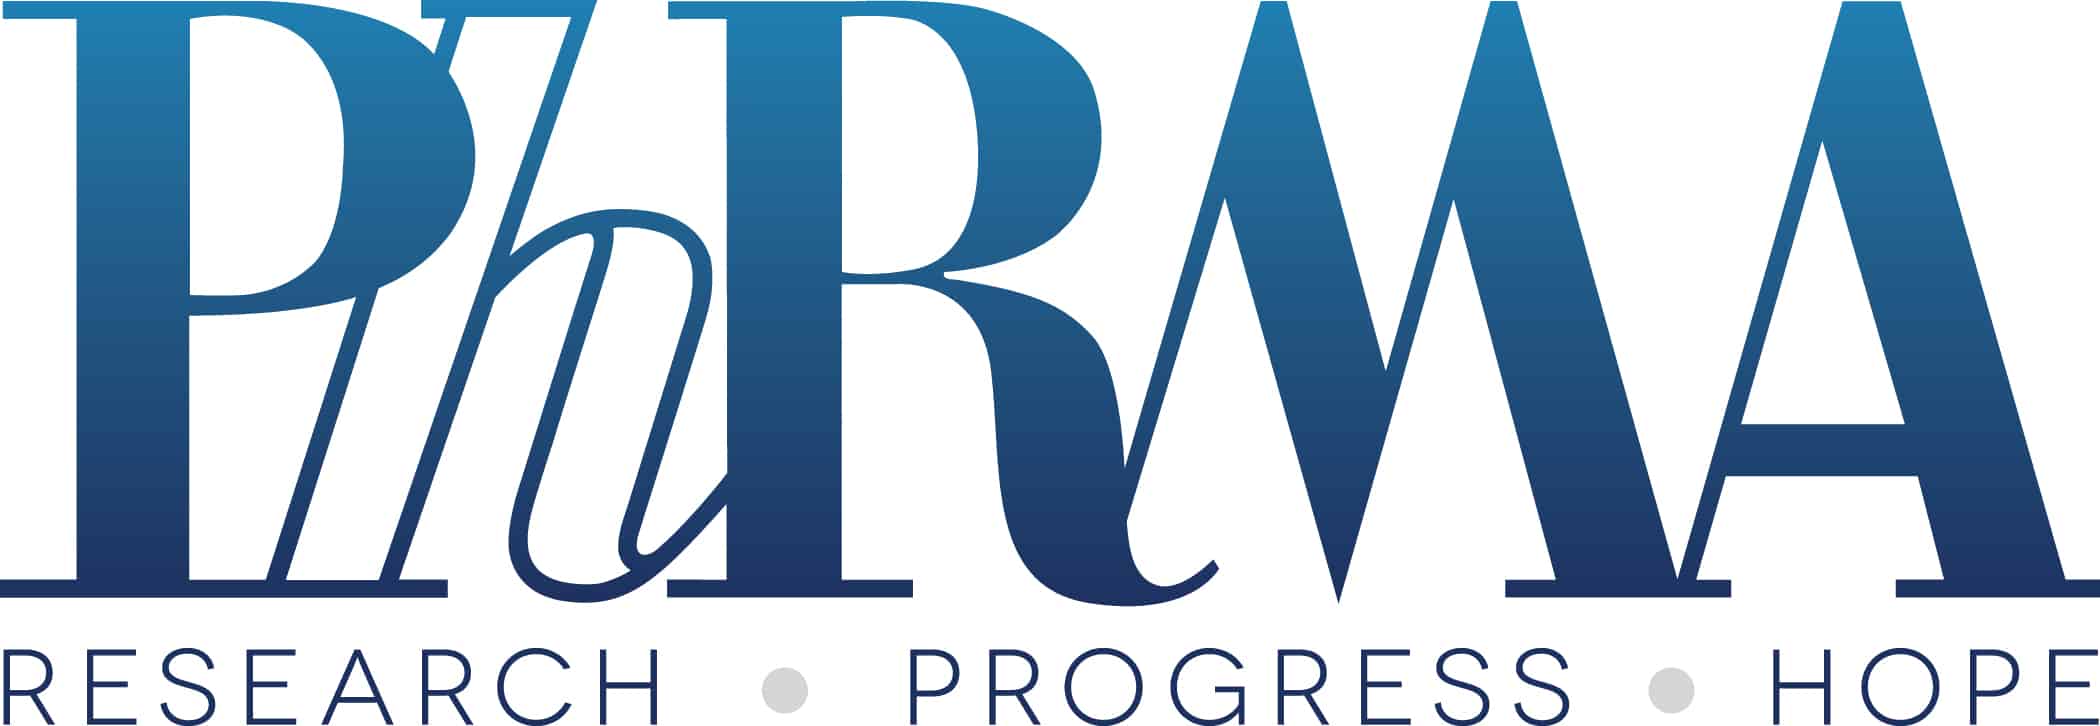 PhRMA Logo